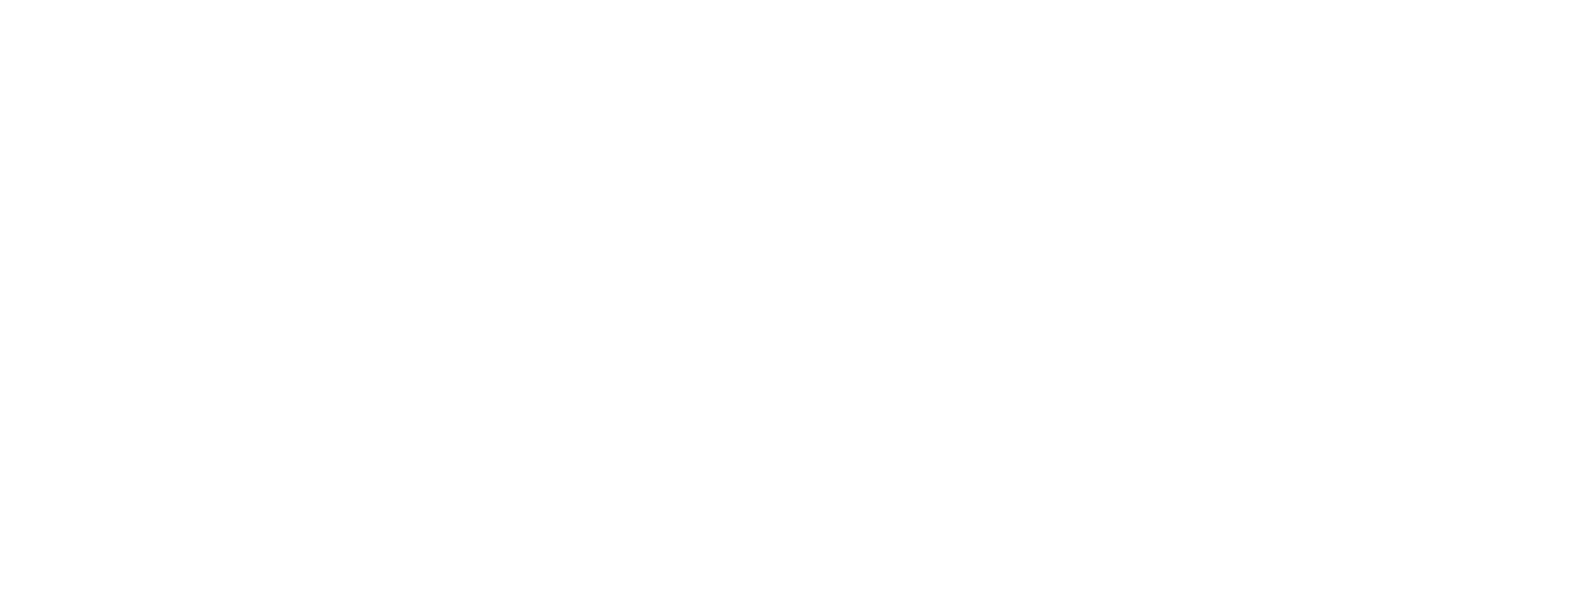 Phillips Edison & Company Logo groß für dunkle Hintergründe (transparentes PNG)